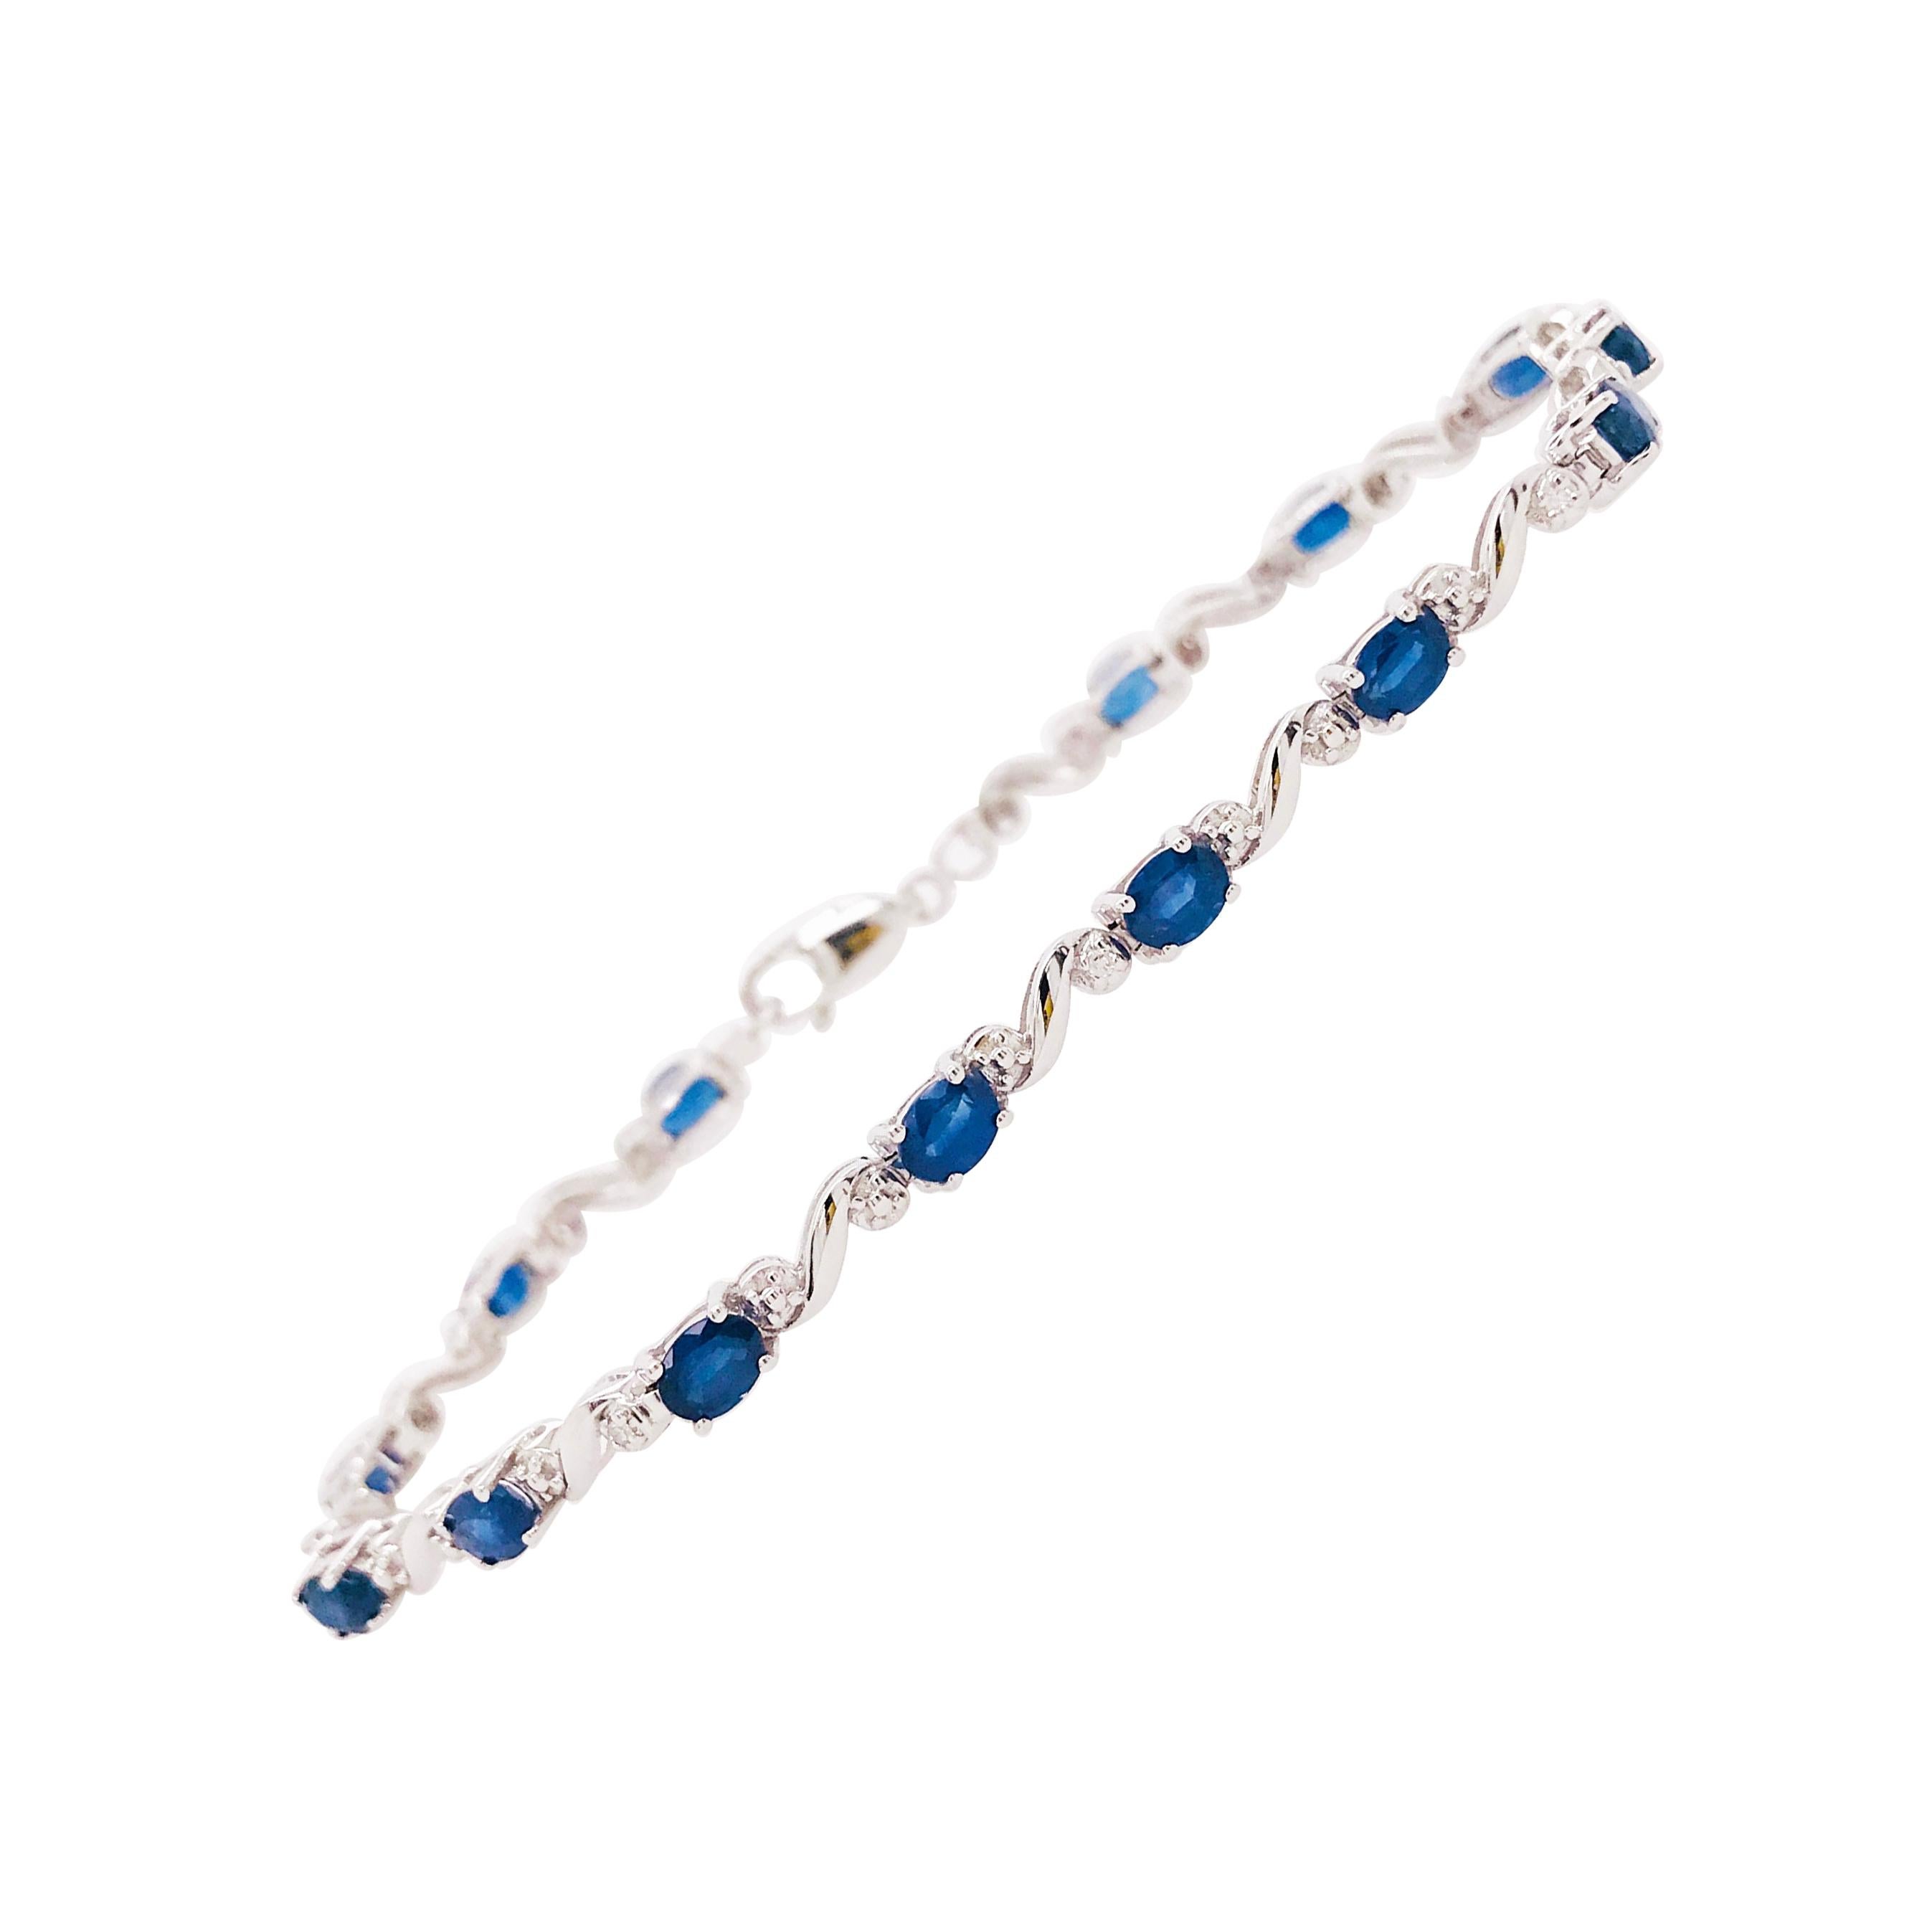 4.50 Carat Blue Sapphire & 0.16 Carat Diamond Tennis Bracelet in Sterling Silver